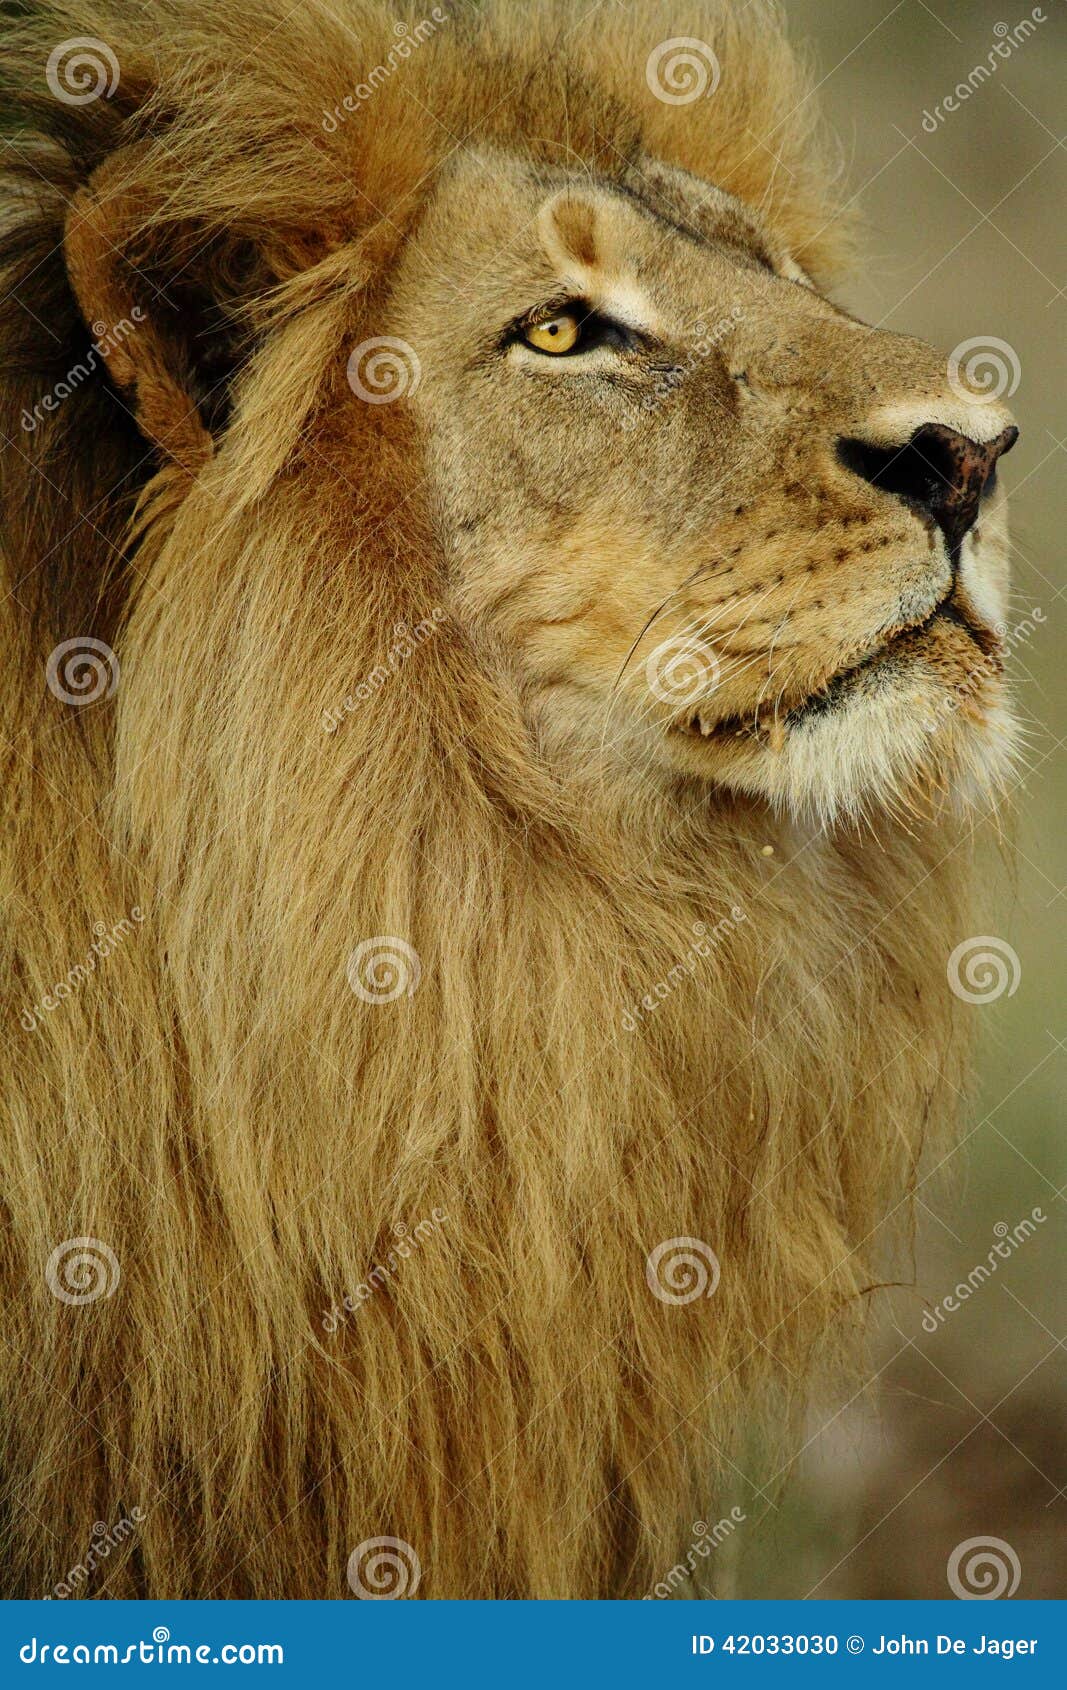 big lion with stunning full mane